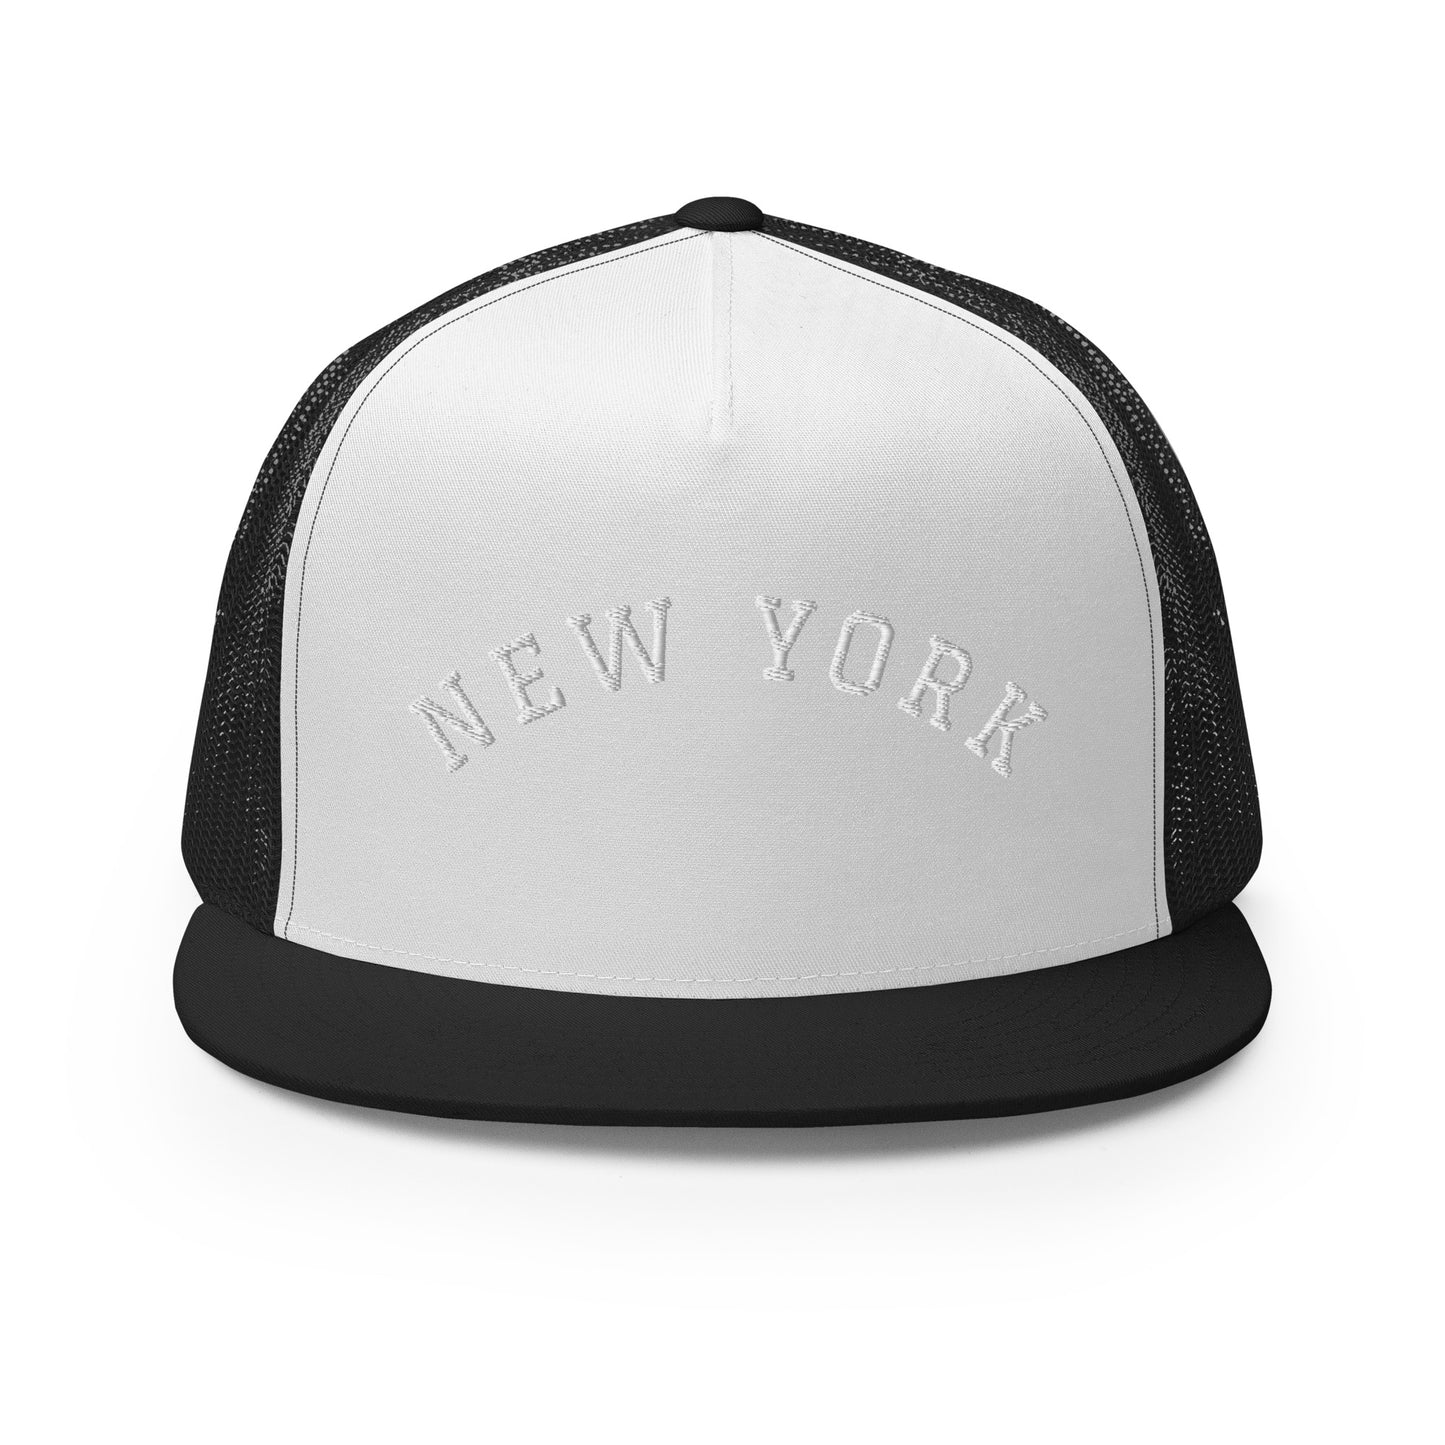 New York Arch High 5 Panel A-Frame Snapback Trucker Hat